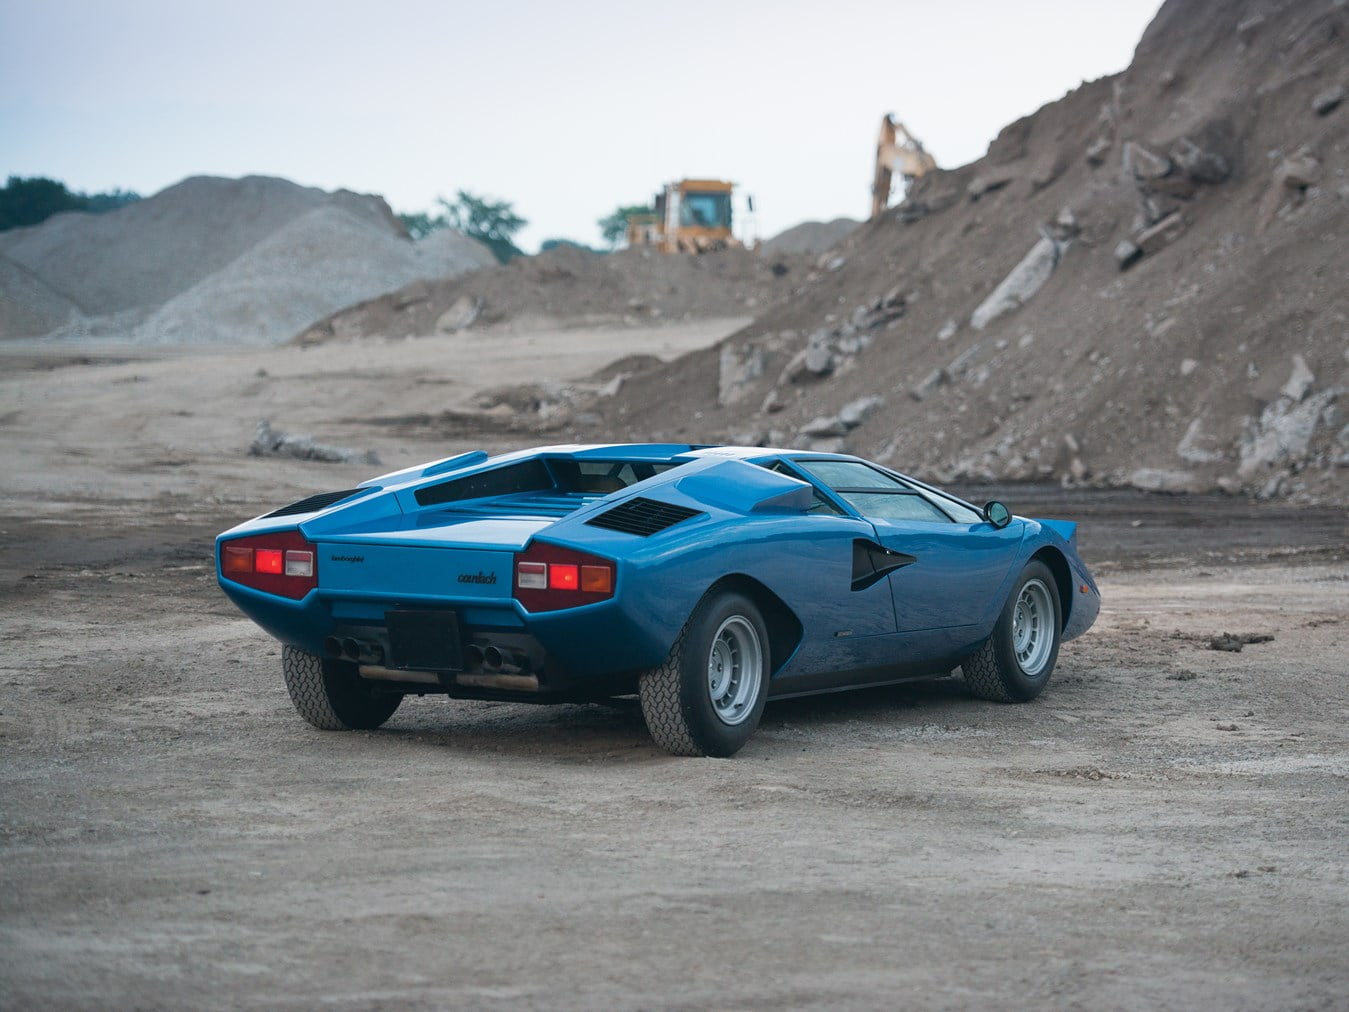 Lamborghini Countach, classic car, blue cars, mode of transportation